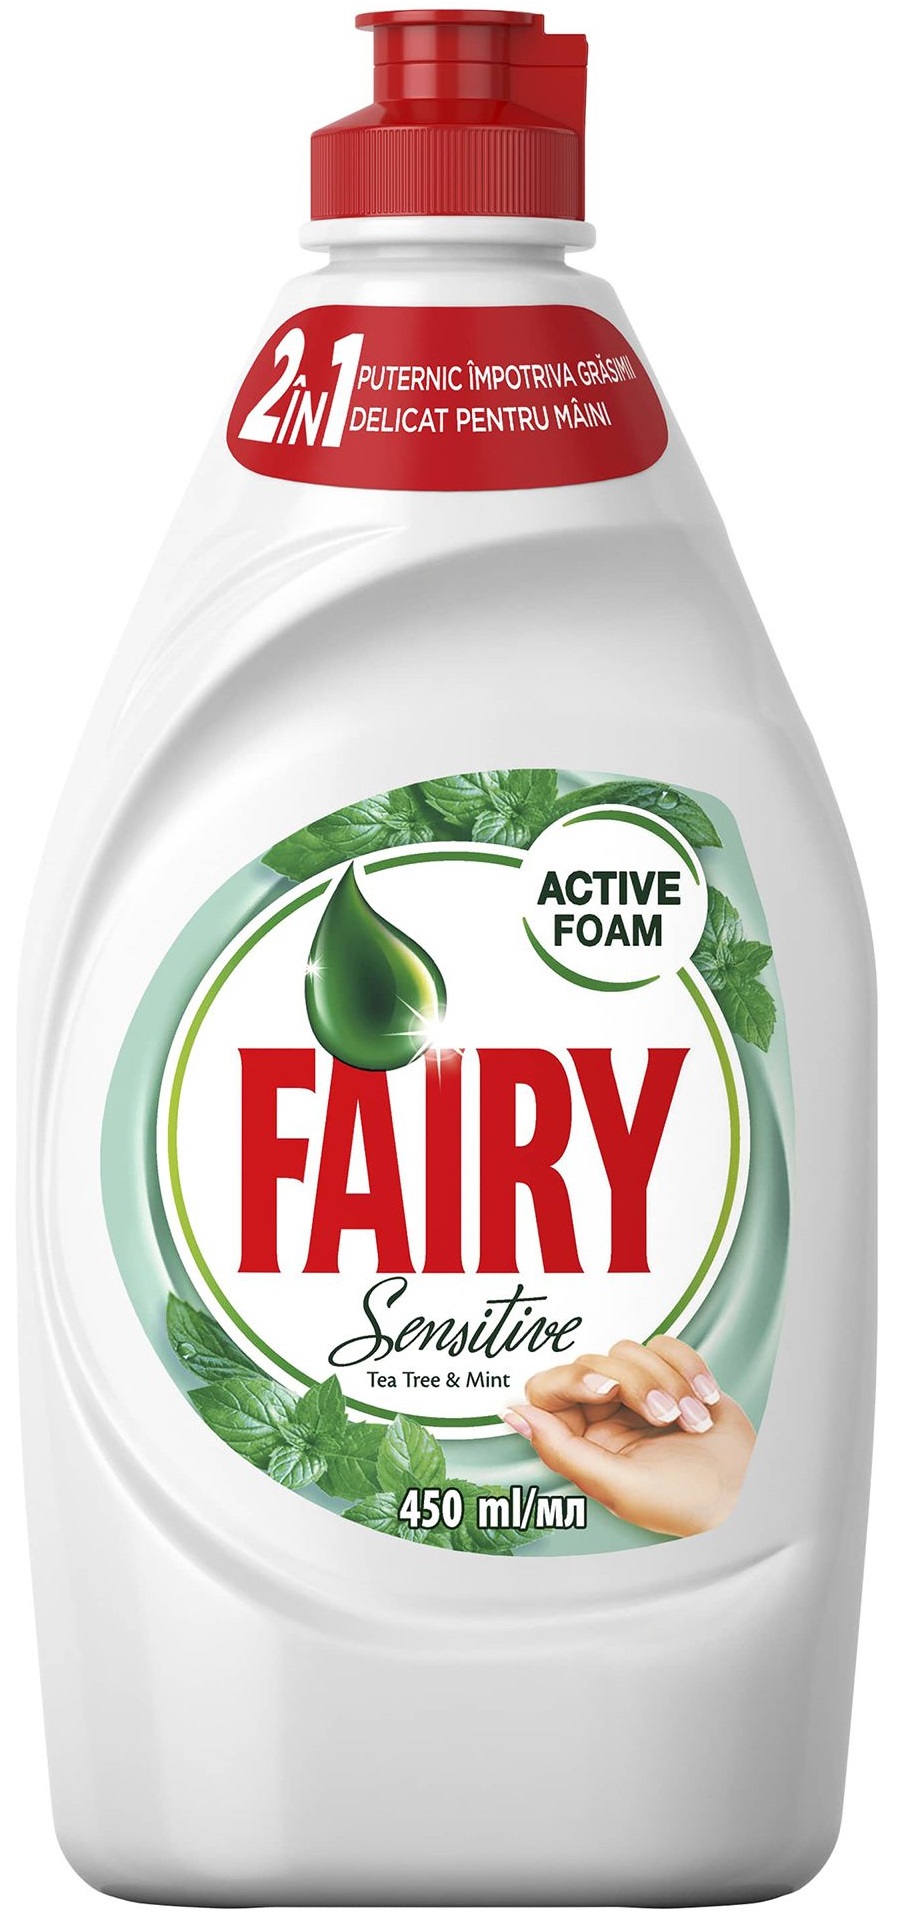 Detergent de vase FAIRY Sensitive Tea Tree and Mint, 450ml